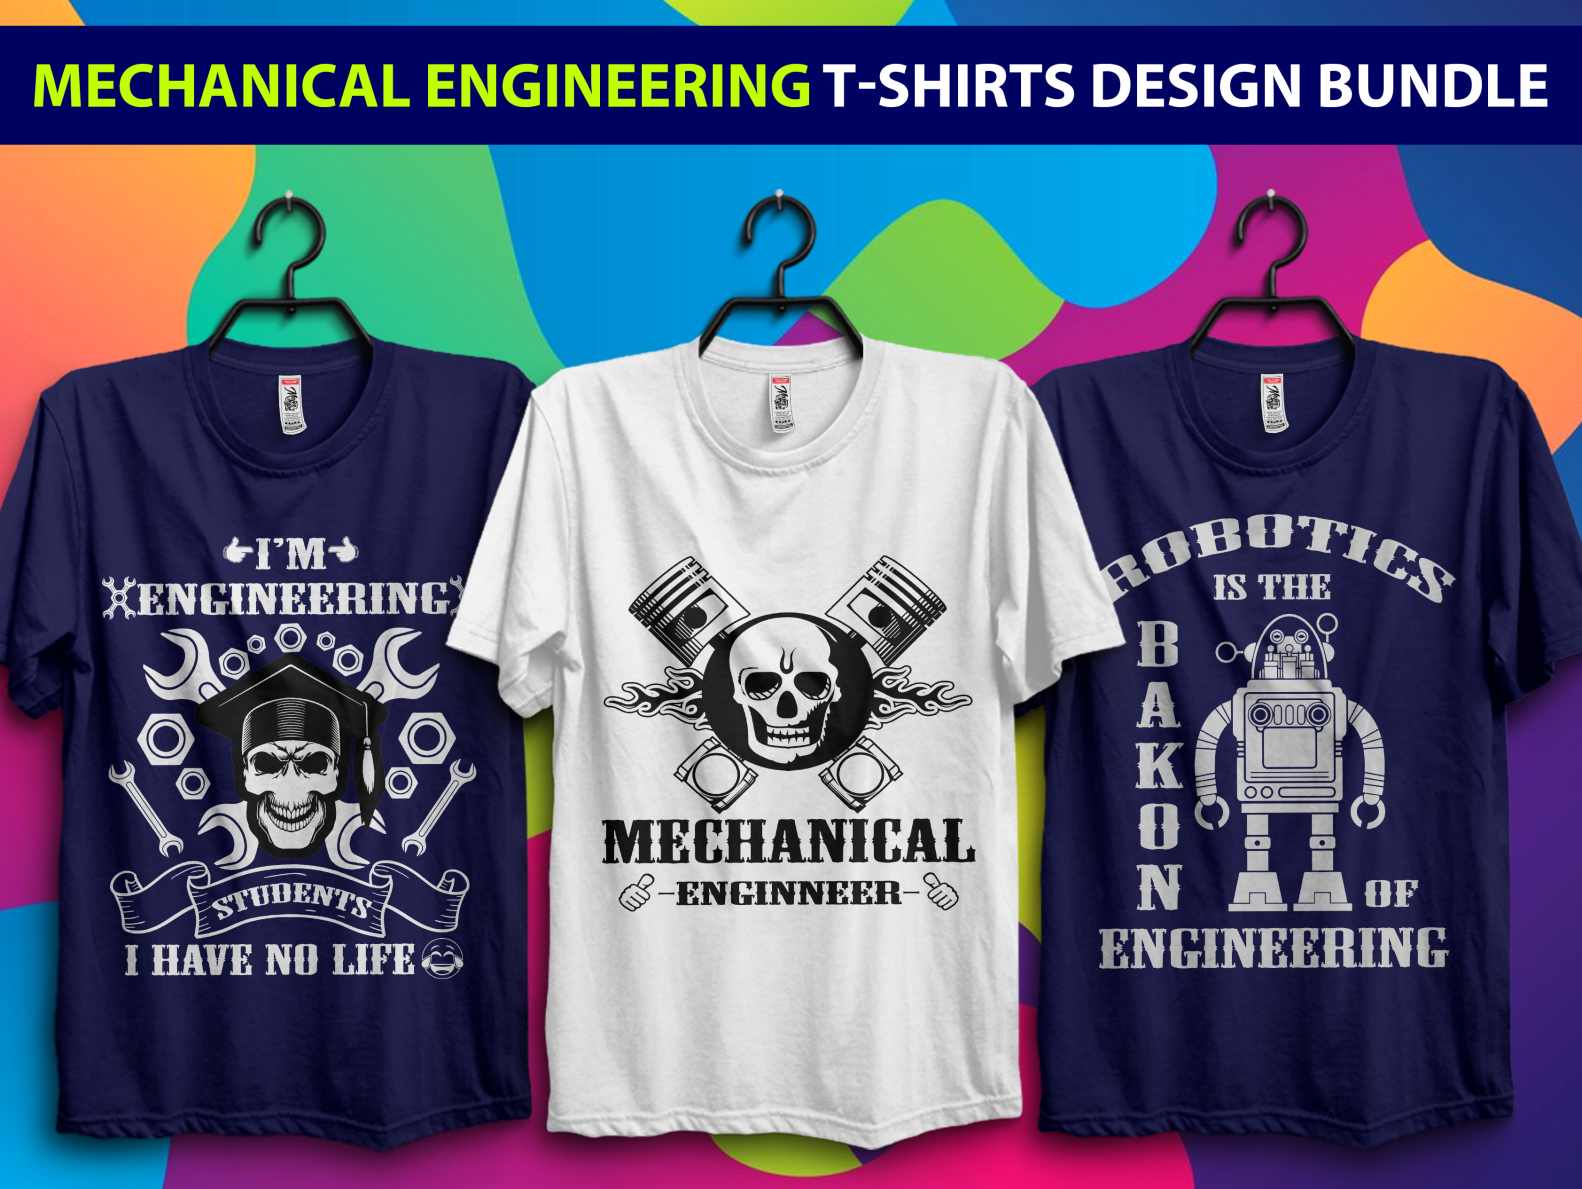 Mechanical tshirt design bundle #Aliexpress by Akash Chandra Saha on ...